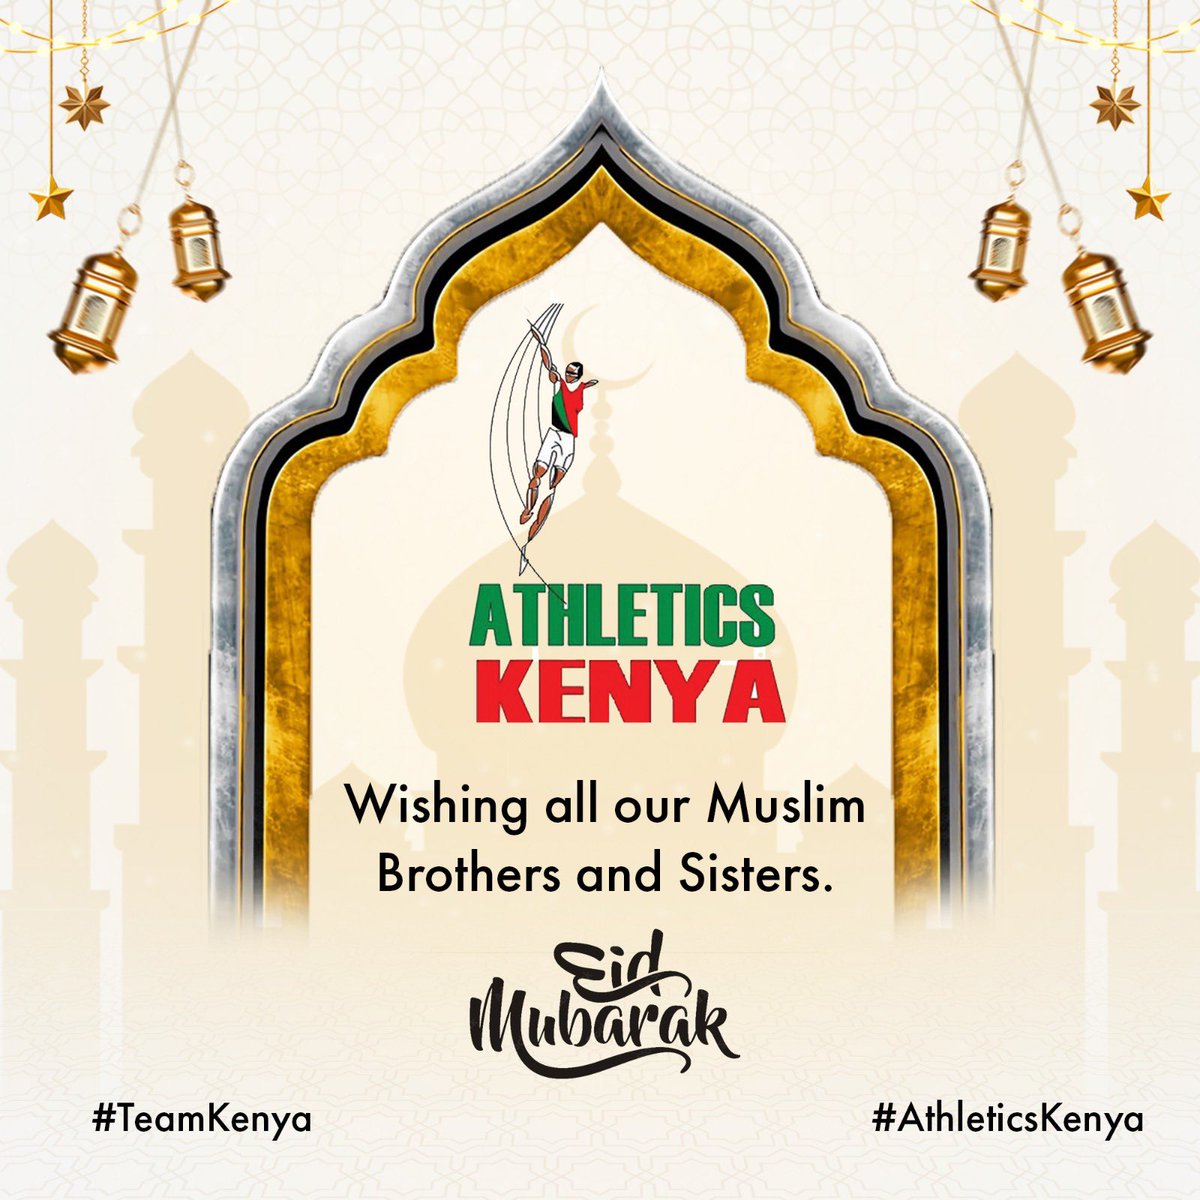 Wishing all our Muslim Brothers and Sisters, Happy Eid Mubarak!! #Teamkenya #AthleticsKenya